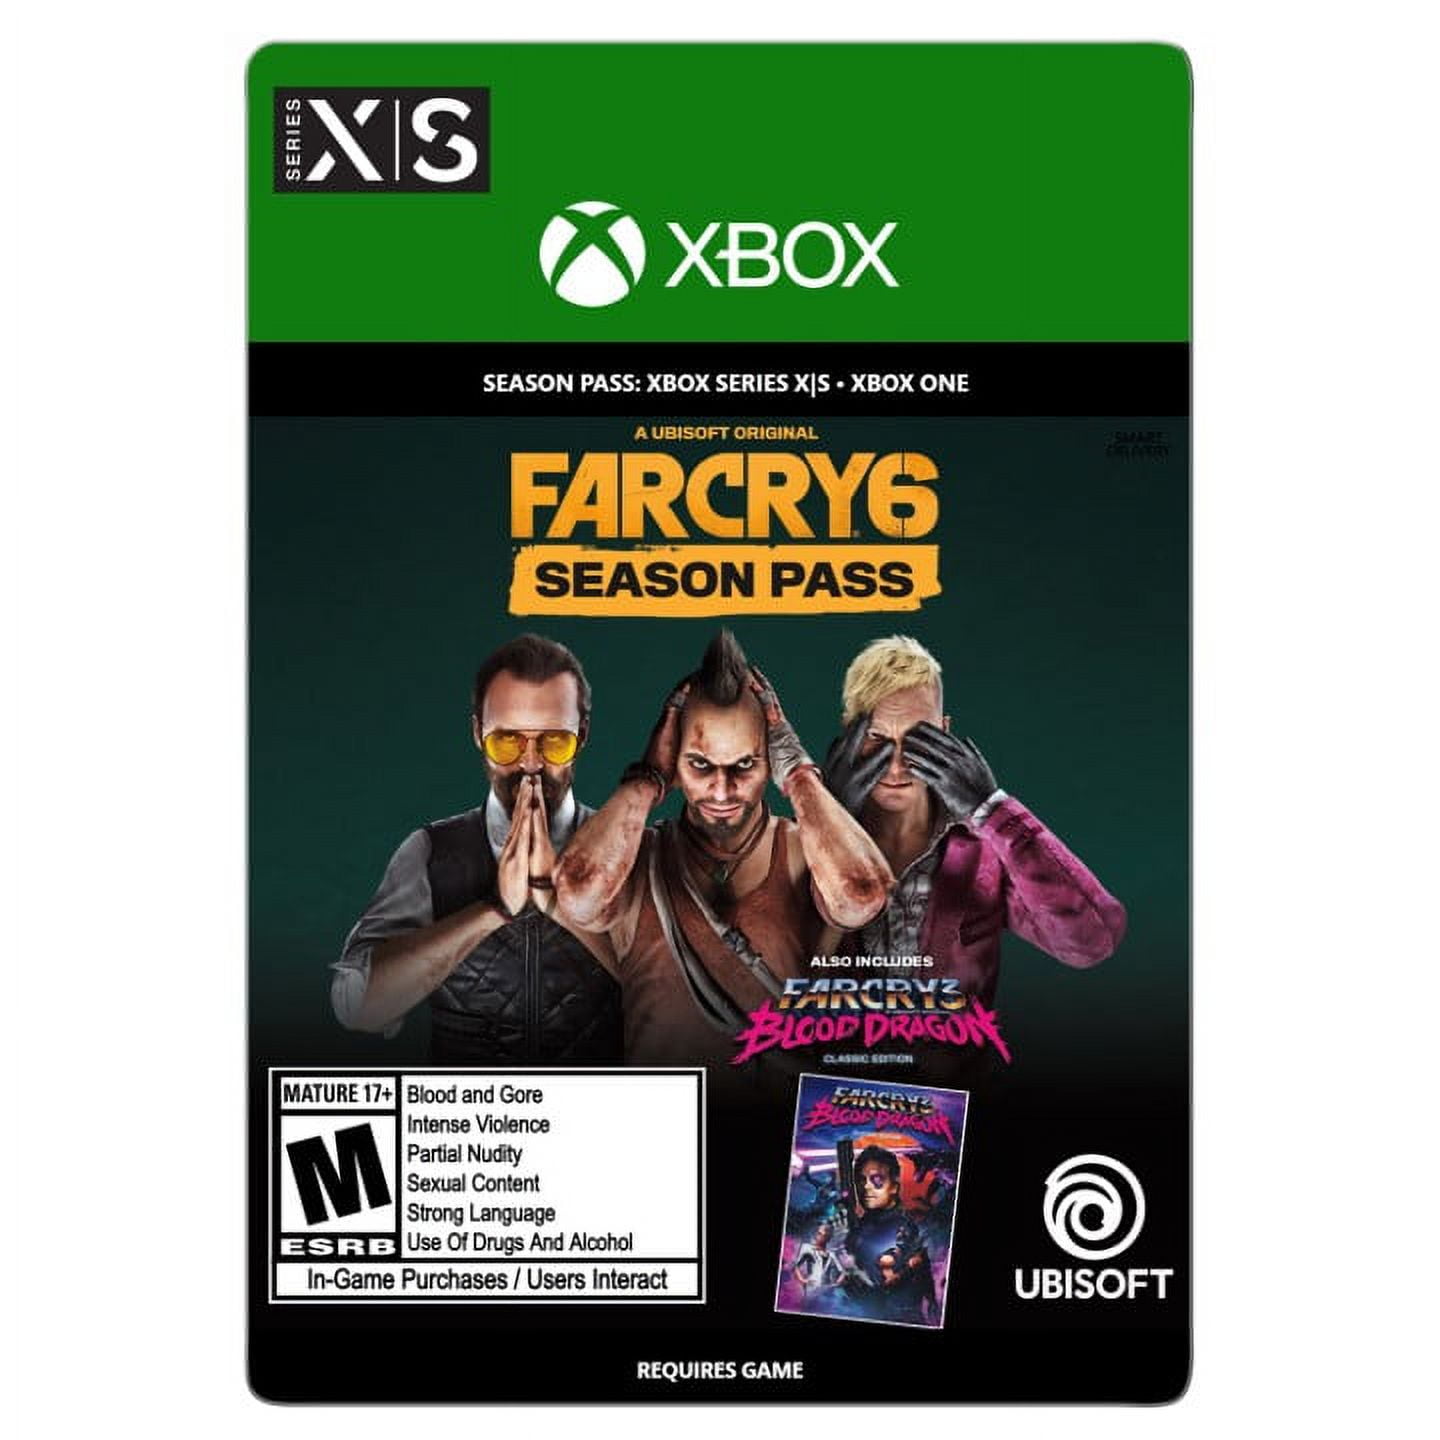 6 Far X,S Pass Xbox Series - Cry Xbox One, Season [Digital]